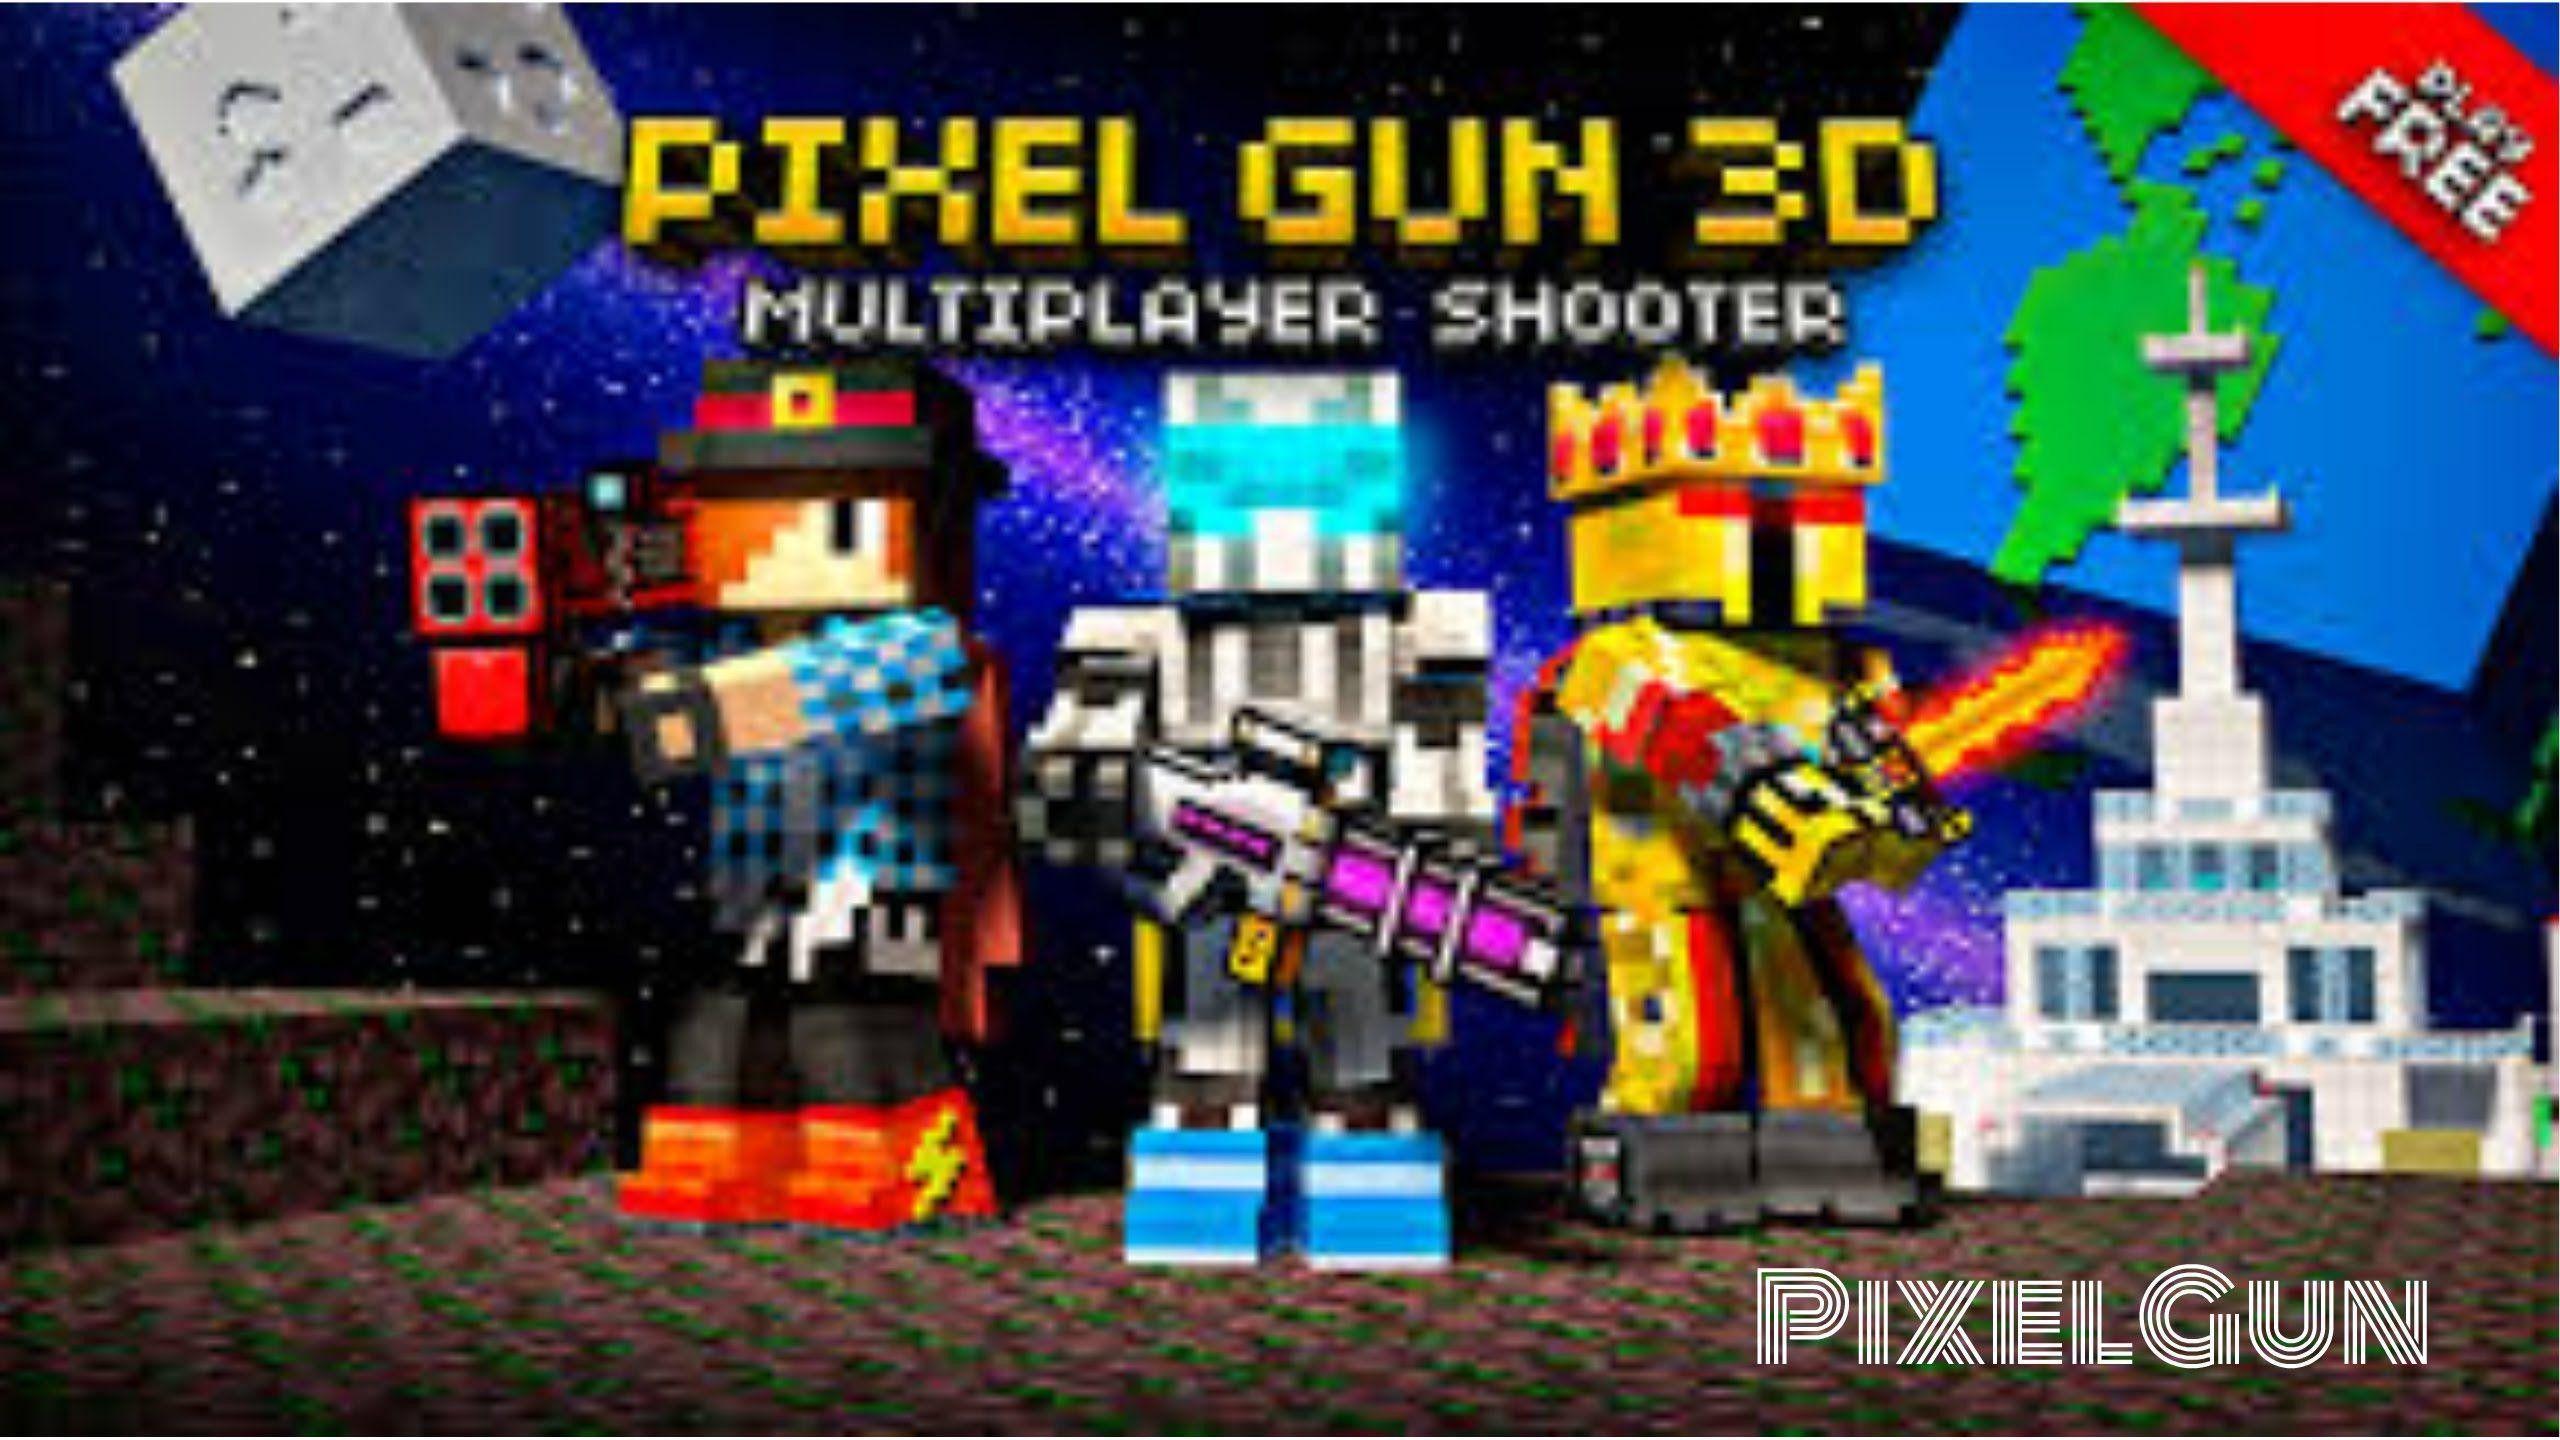 Pixel Gun 3d Fps Shooter Wallpapers Top Free Pixel Gun 3d Fps Shooter Backgrounds Wallpaperaccess - pixel gun 3d roblox